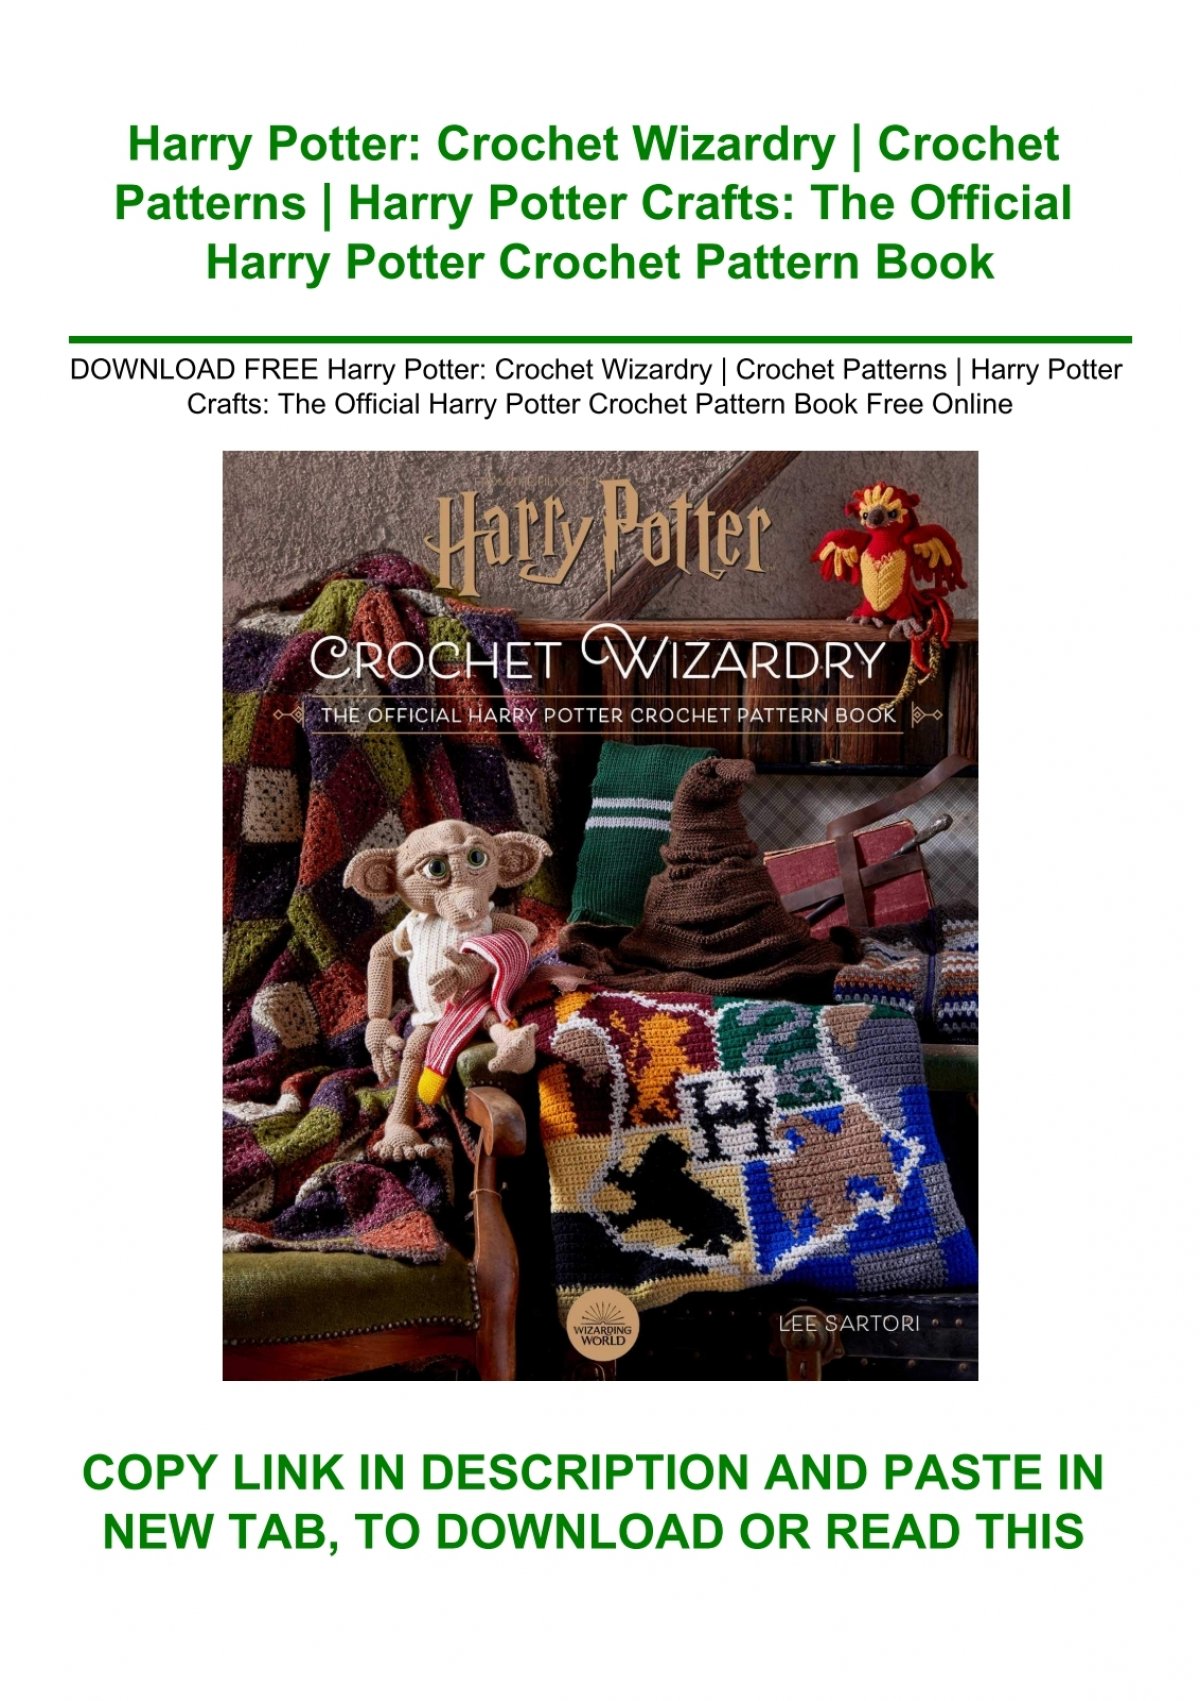 Harry Potter: Crochet Wizardry, Crochet Patterns